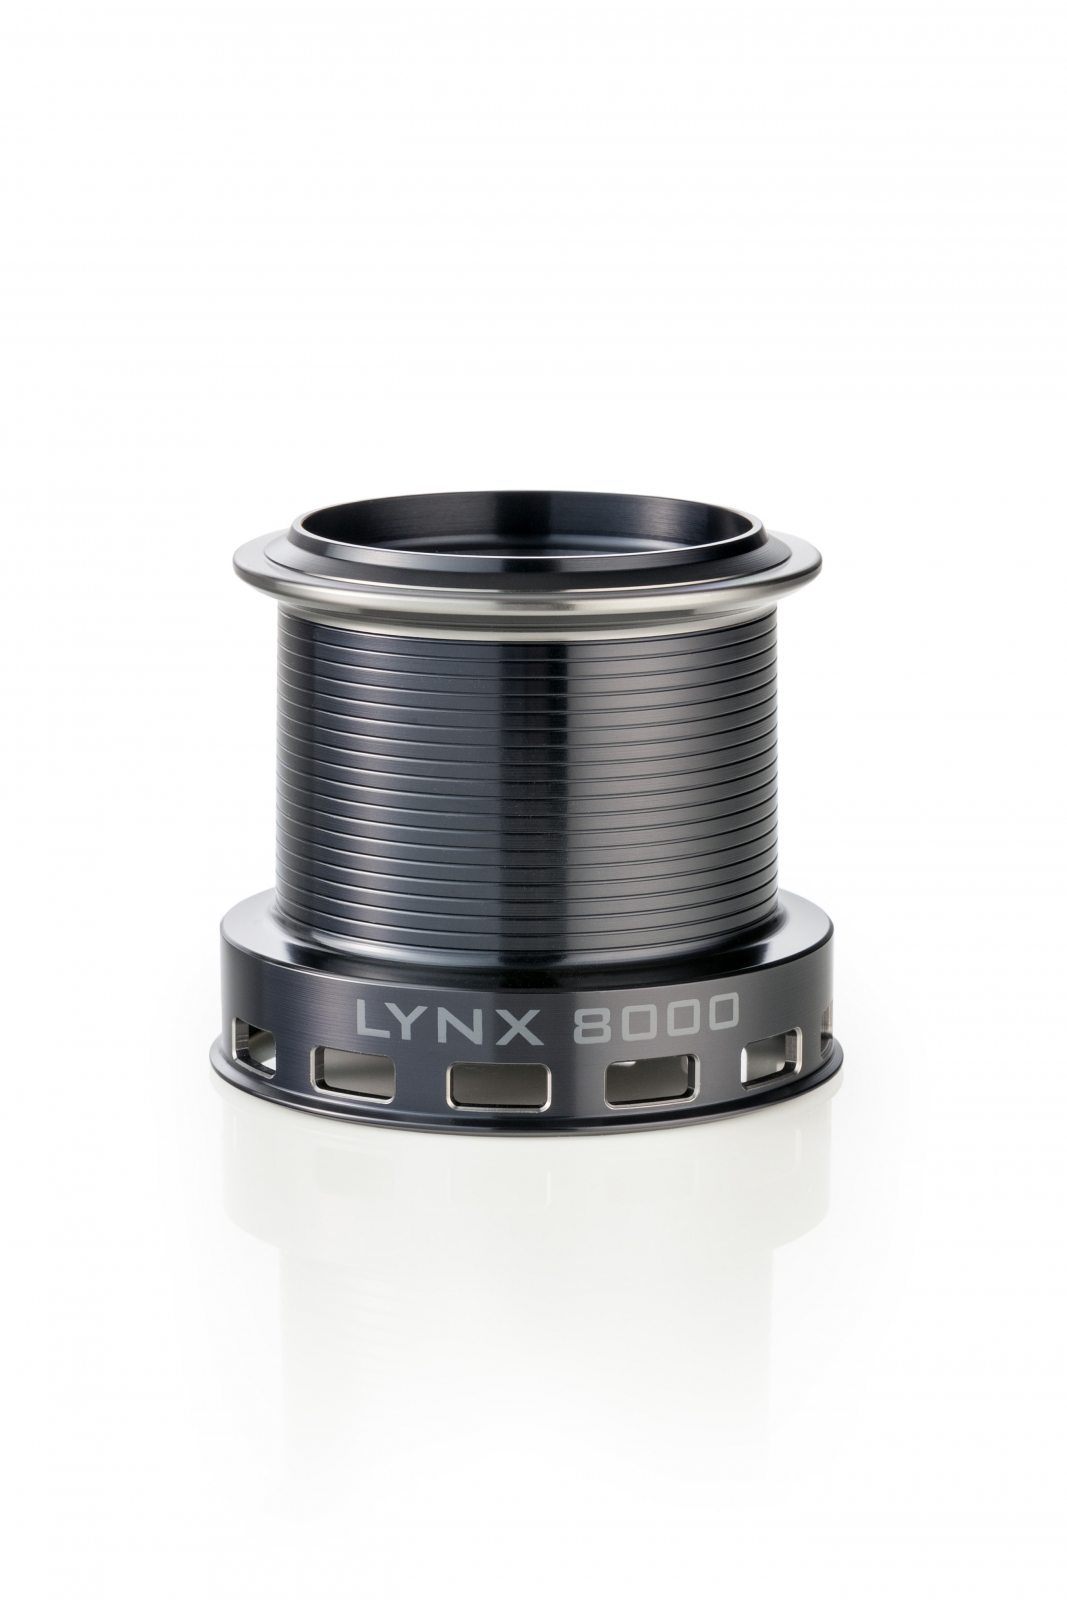 Europe Shop Mivardi MIV-RLYNXS080 Spare spool for Lynx 8000